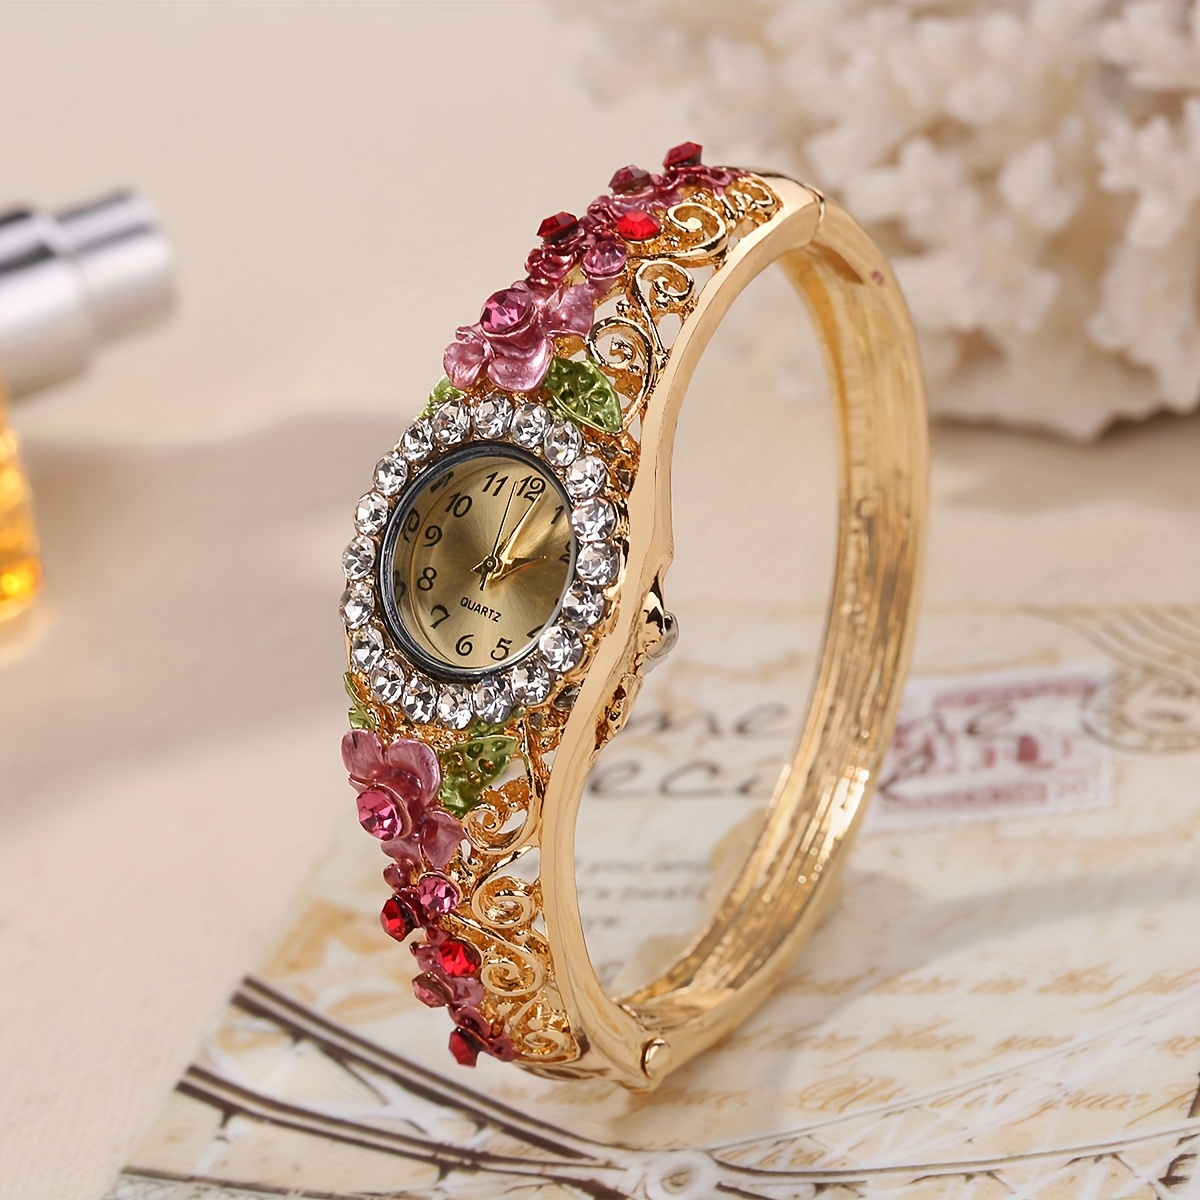 2pcs set womens watch vintage flower quartz bangle watch baroque rhinestone analog wrist watch necklace gift for mom her details 2